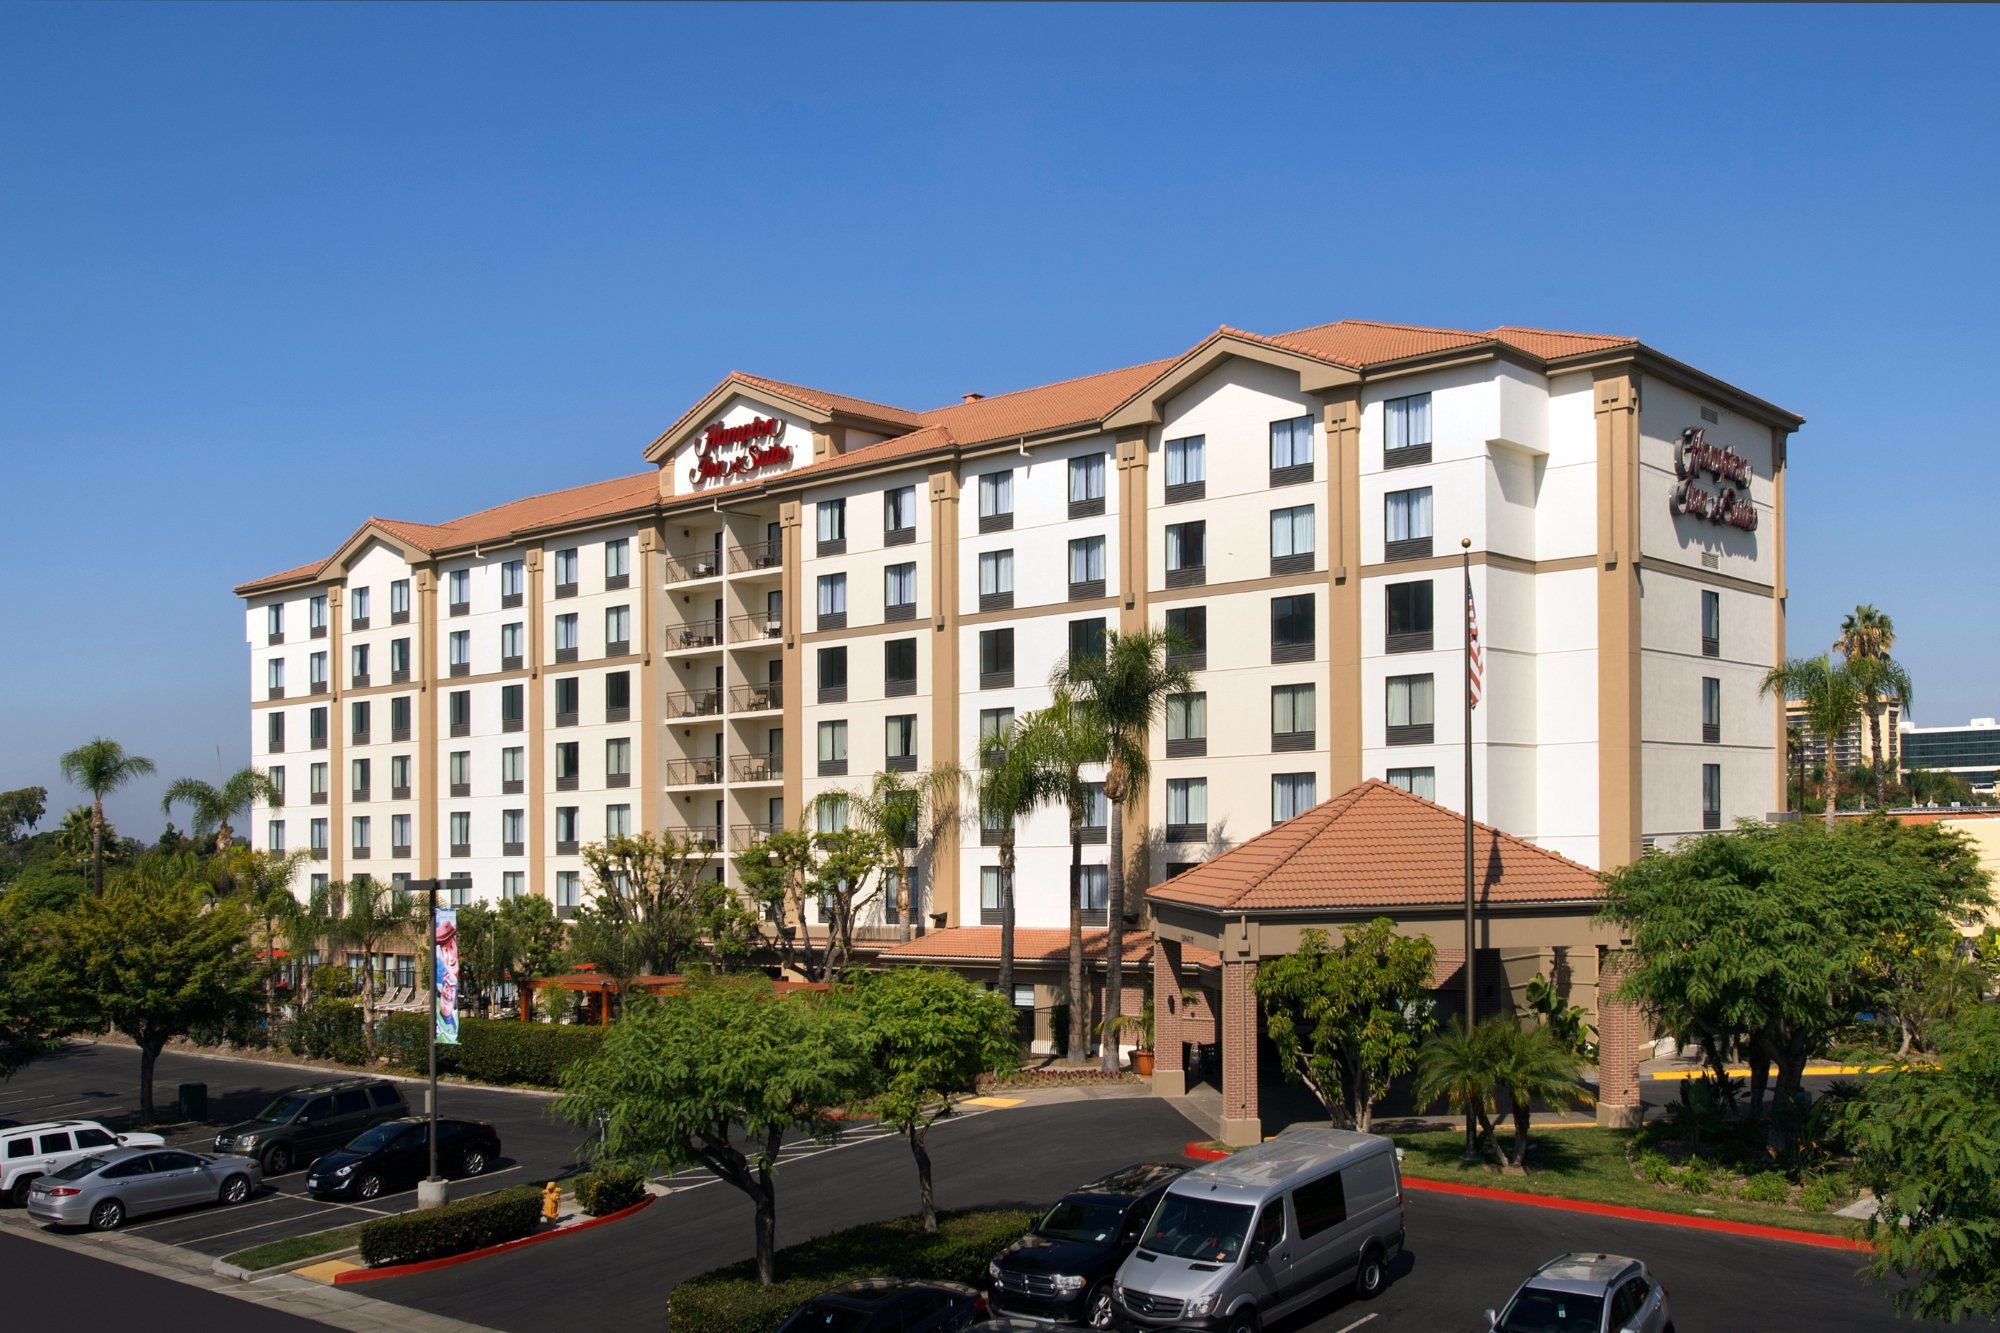 Photo of Hampton Inn & Suites Los Angeles/Anaheim-Garden Grove, Garden Grove, CA